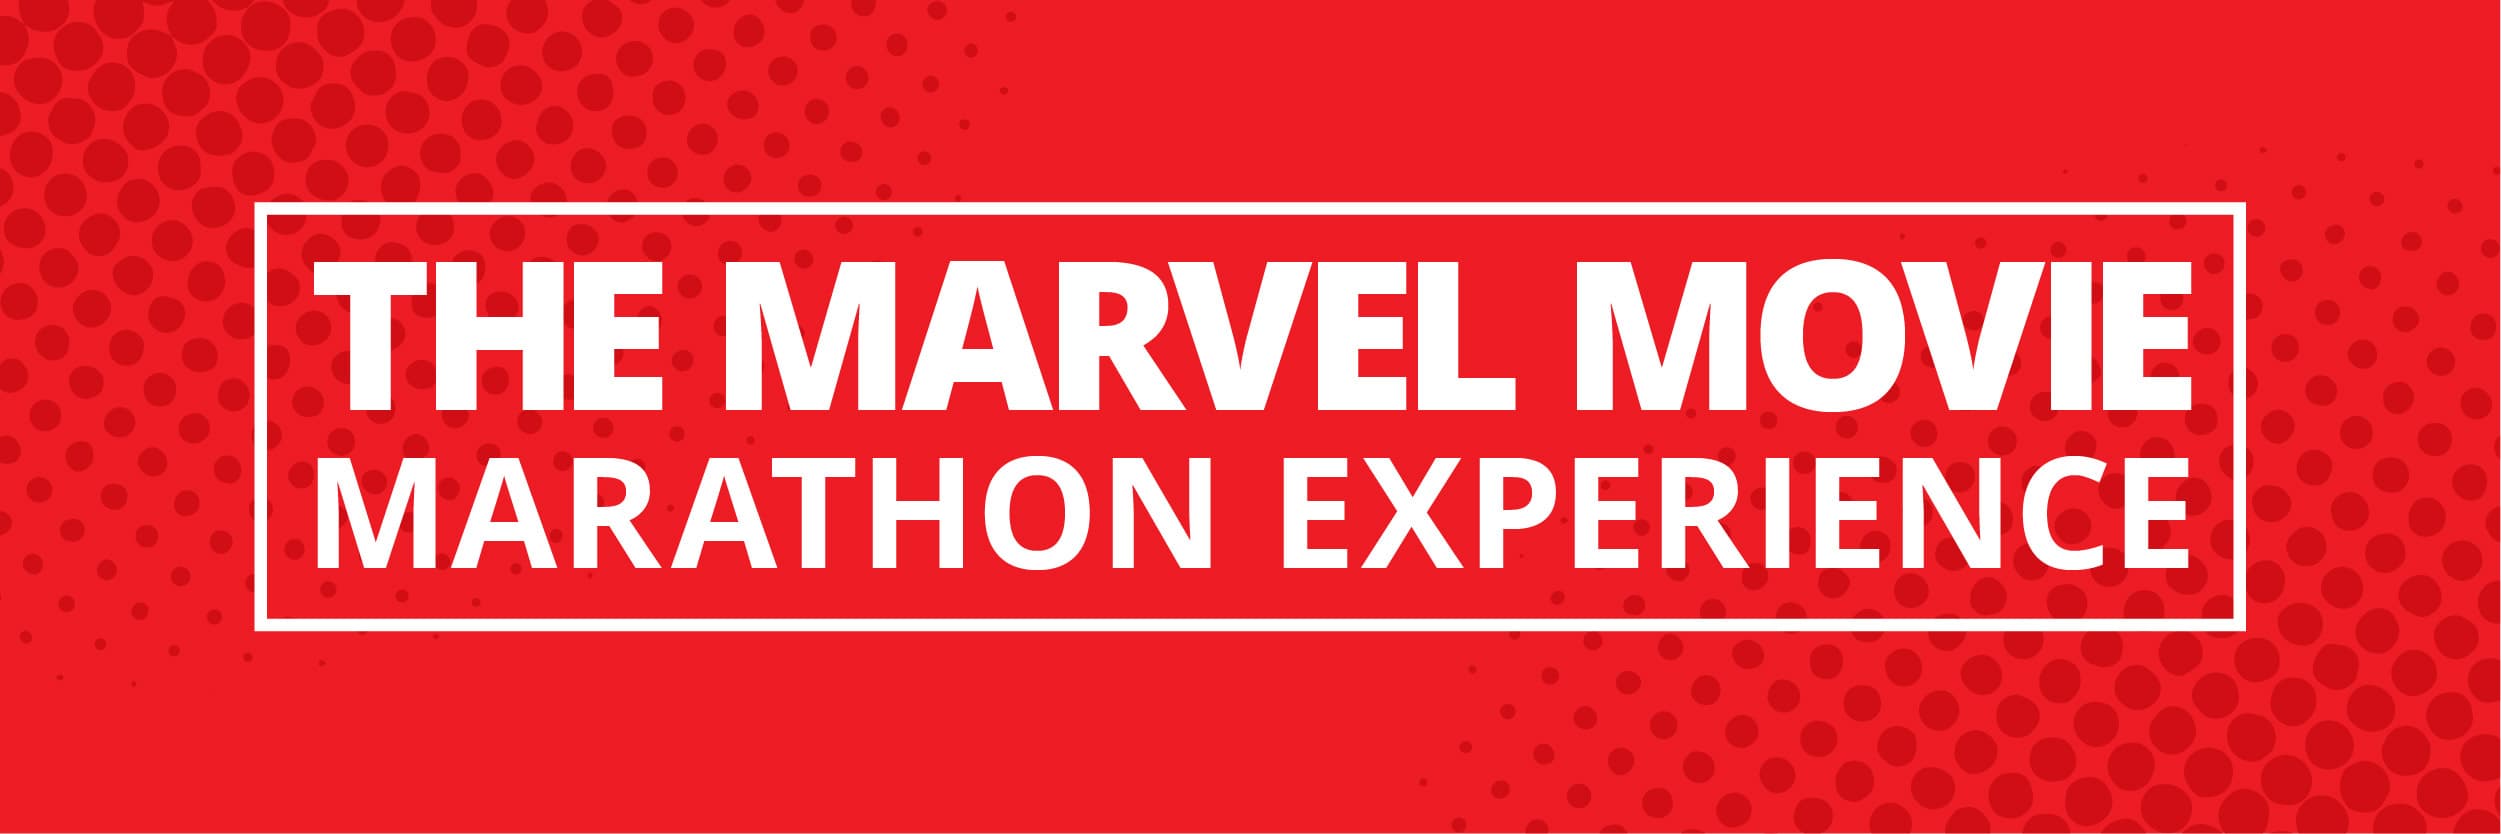 The Marvel Movie Marathon